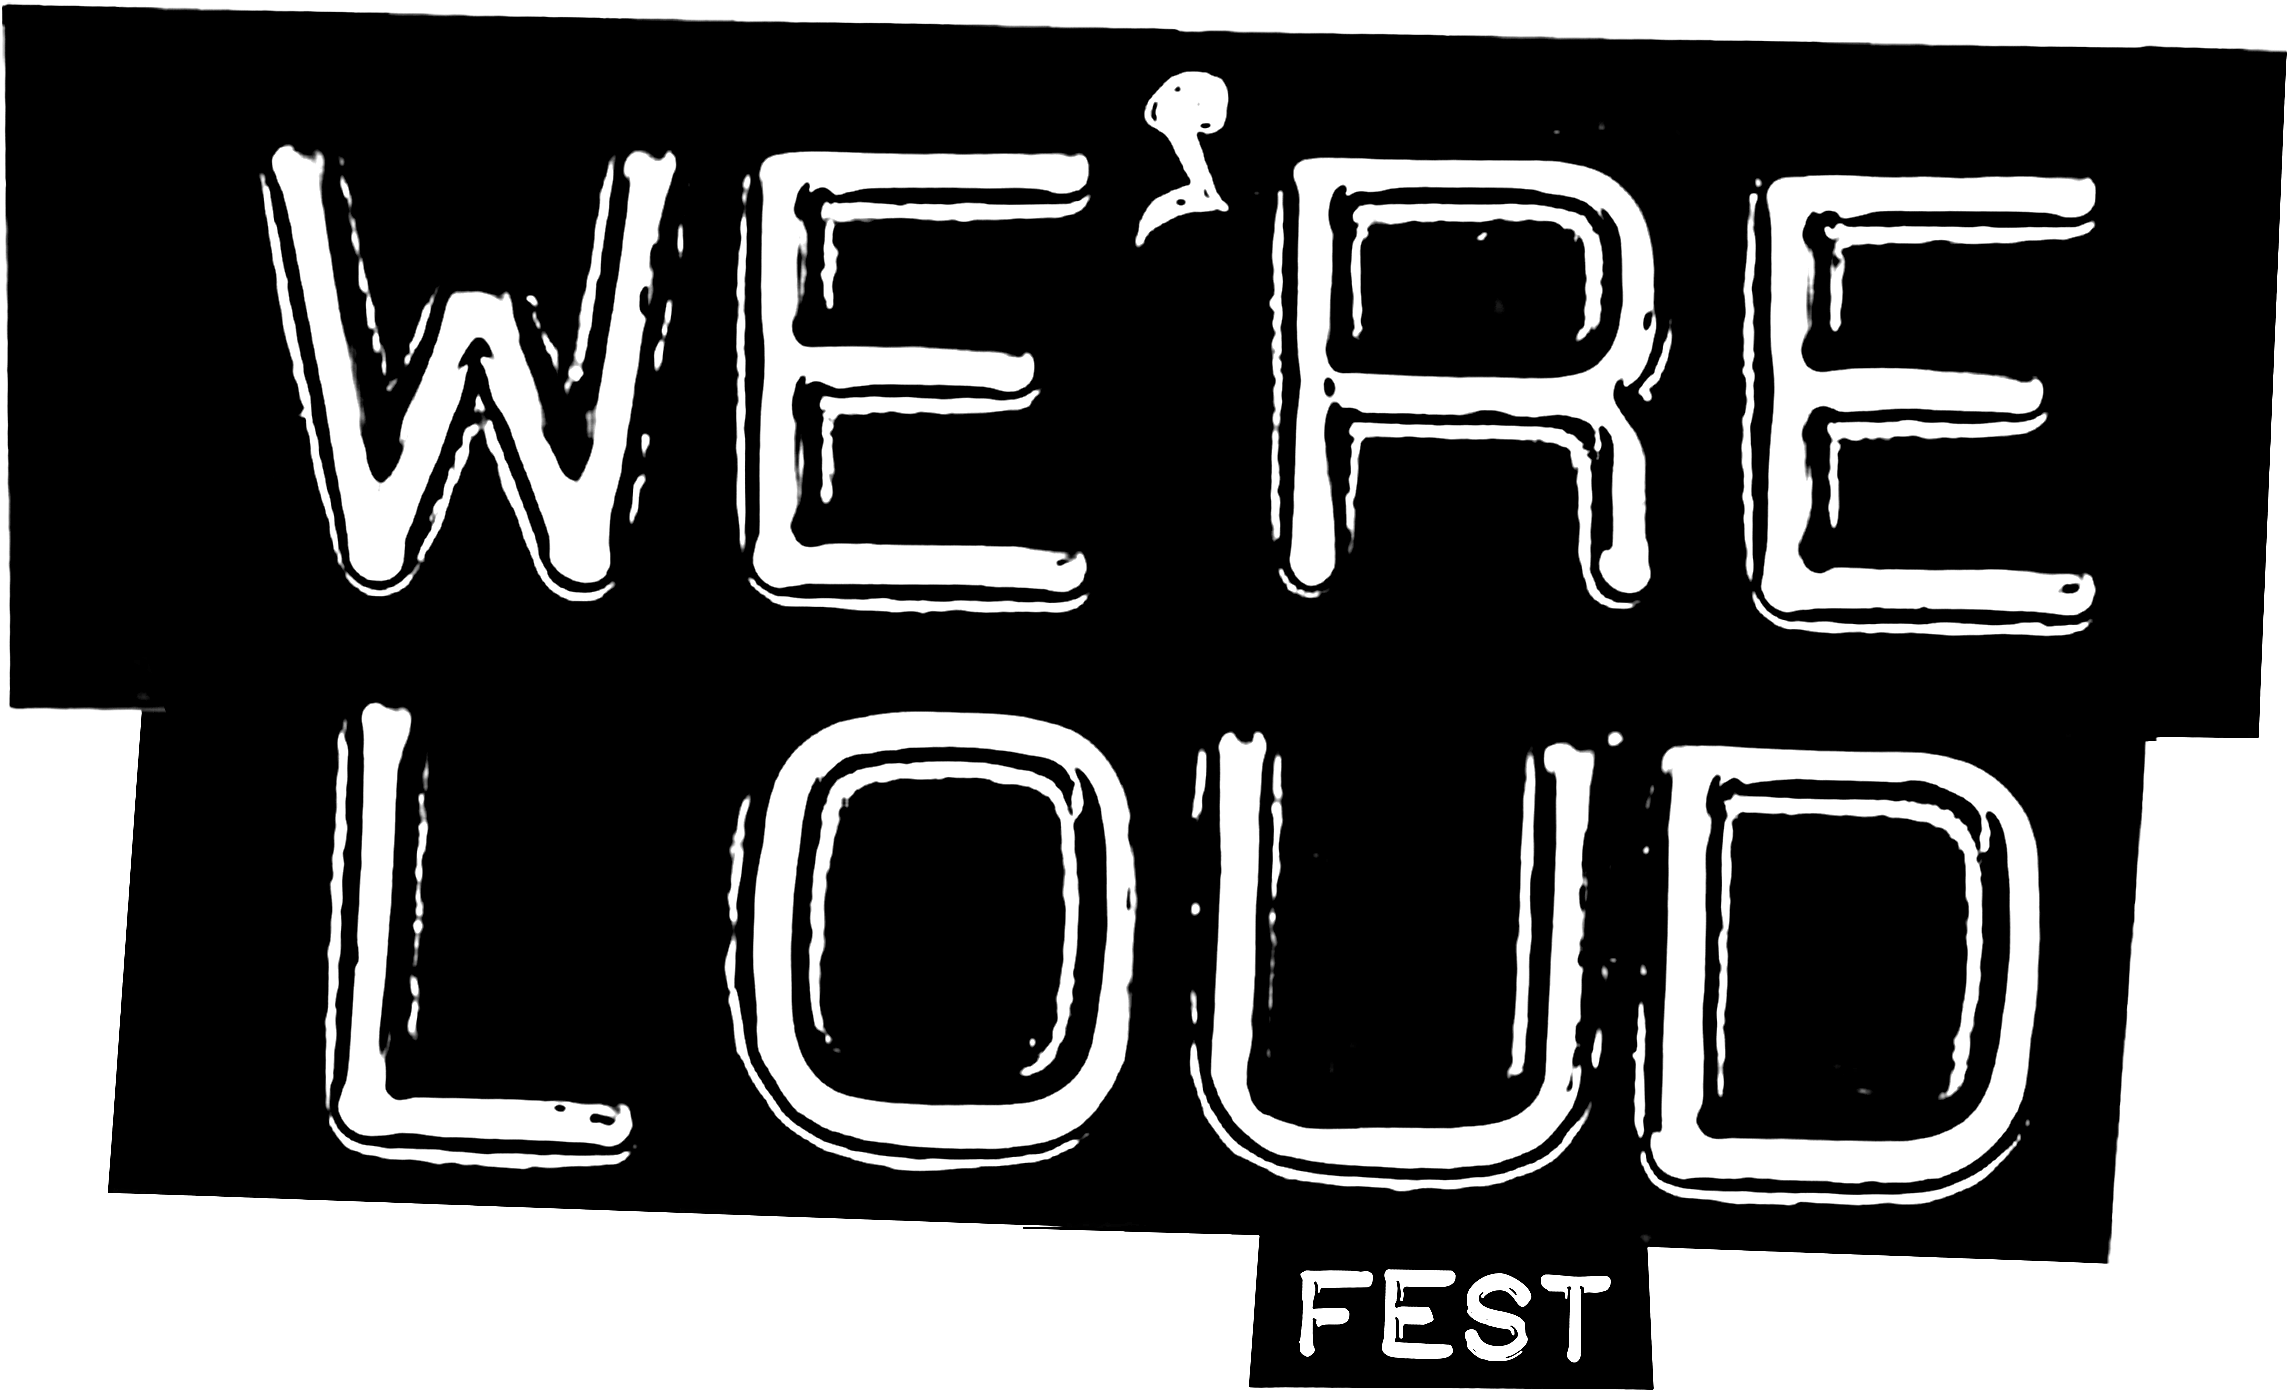 We're Loud Fest